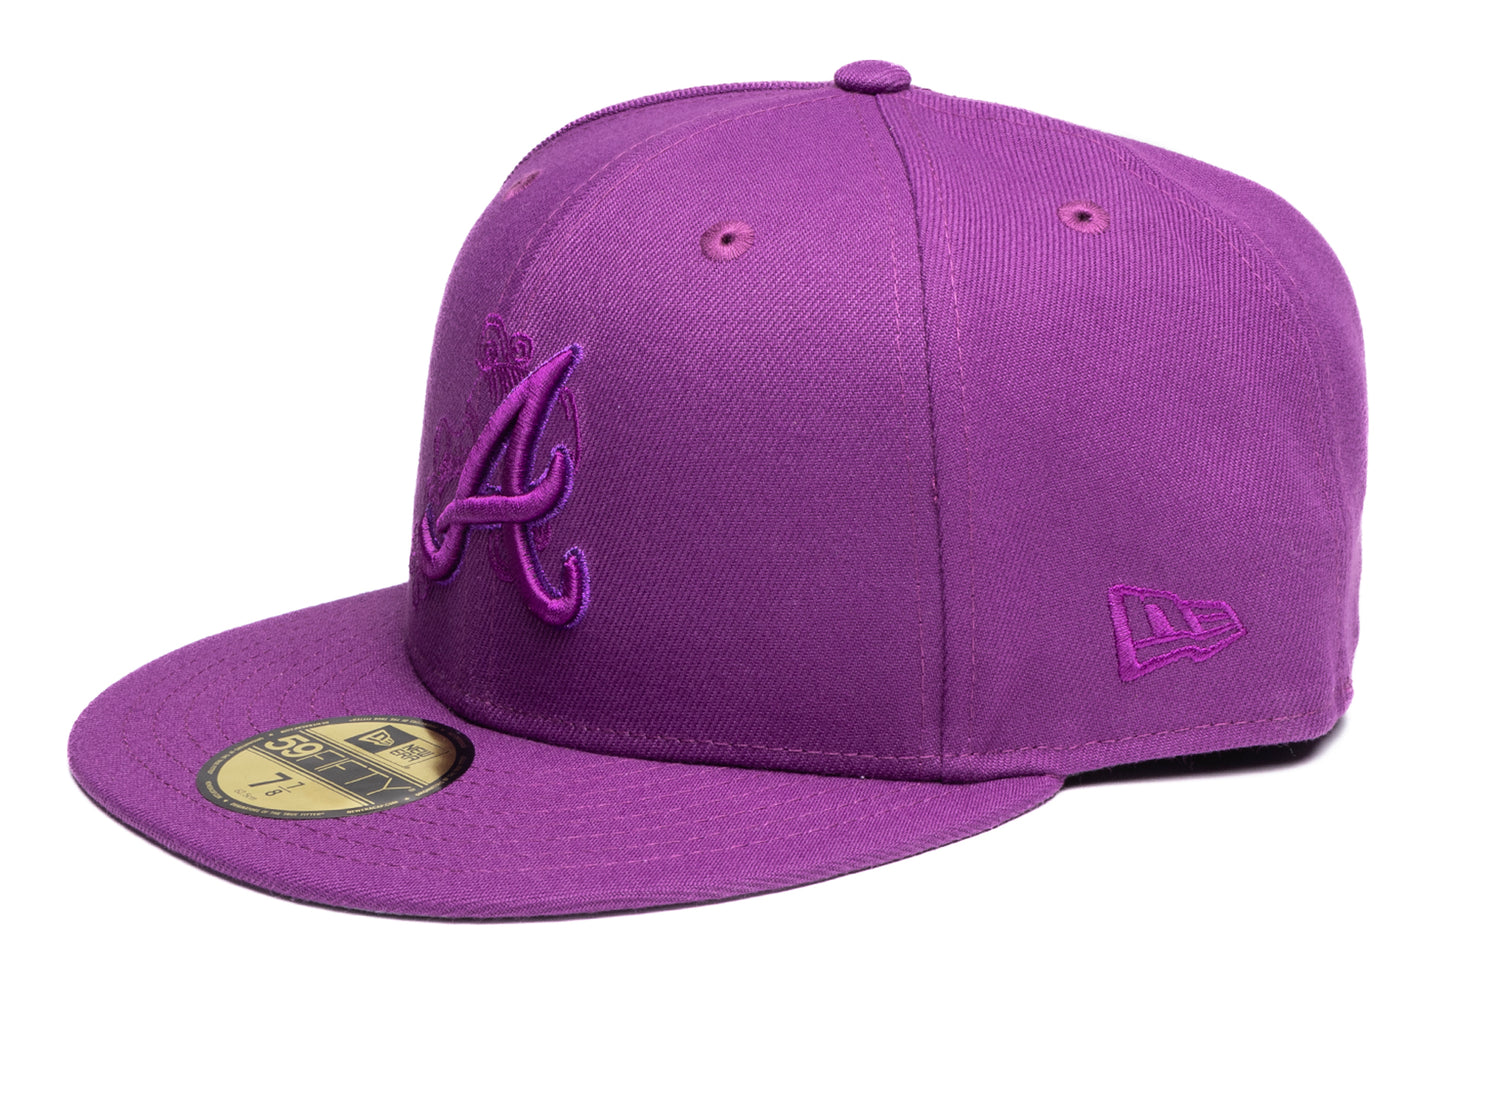 New Era, Accessories, Atlanta Braves Hat